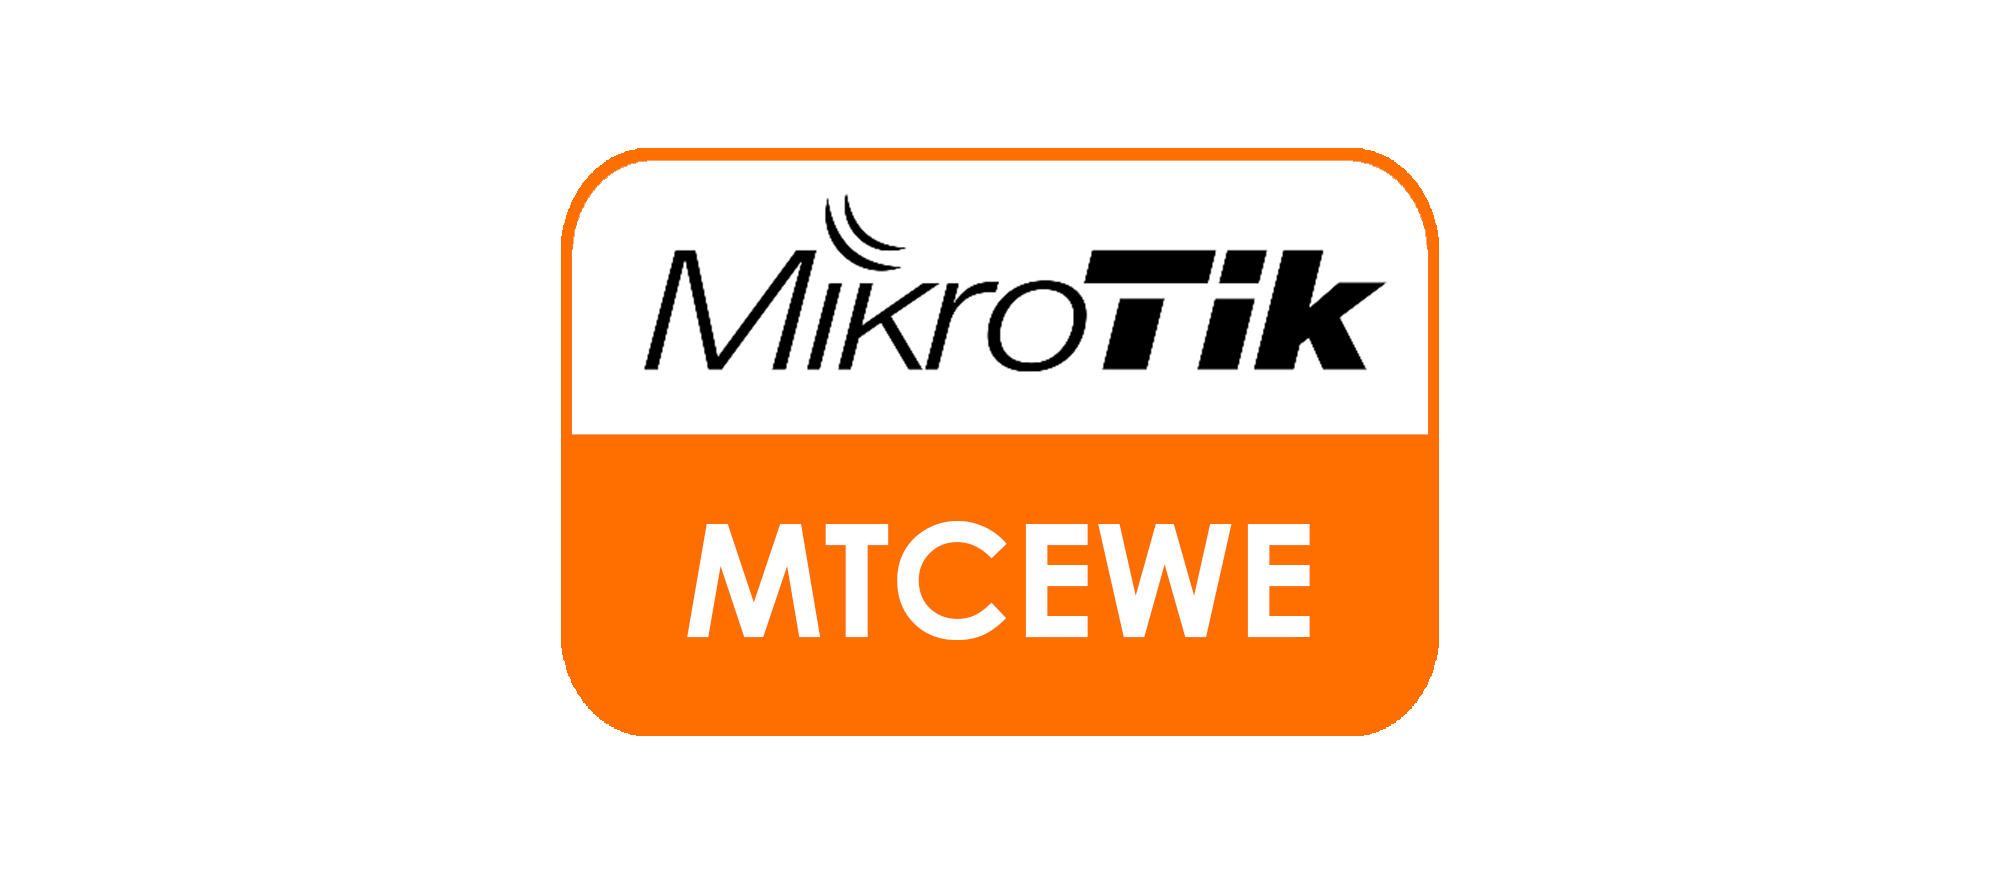 MikroTik Certified Enterprise Wireless Engineer